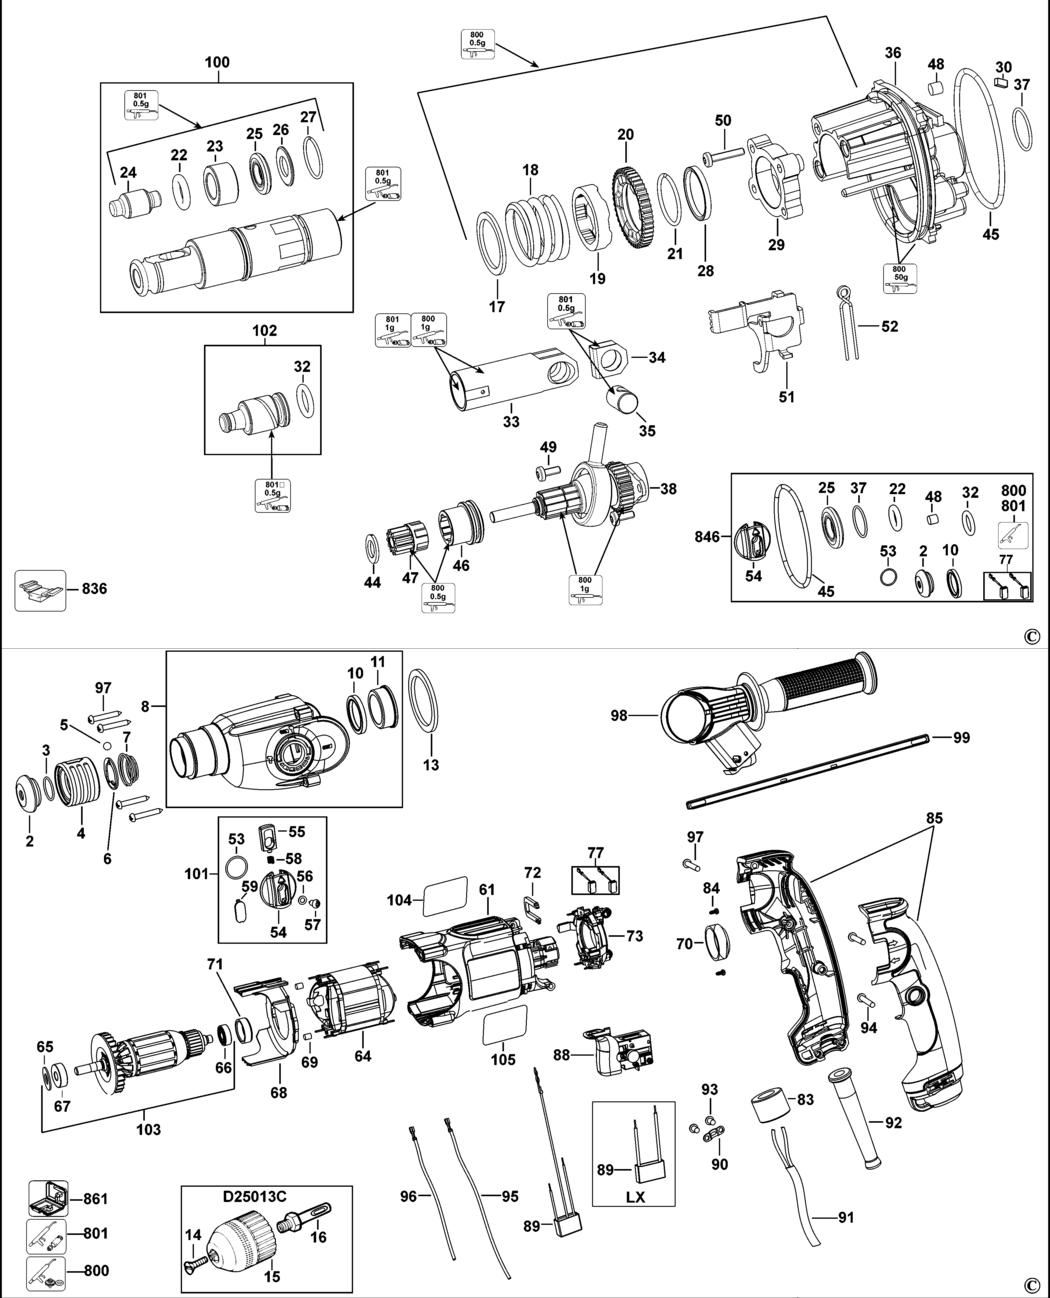 Dewalt D25012K Type 10 Rotary Hammer Spare Parts